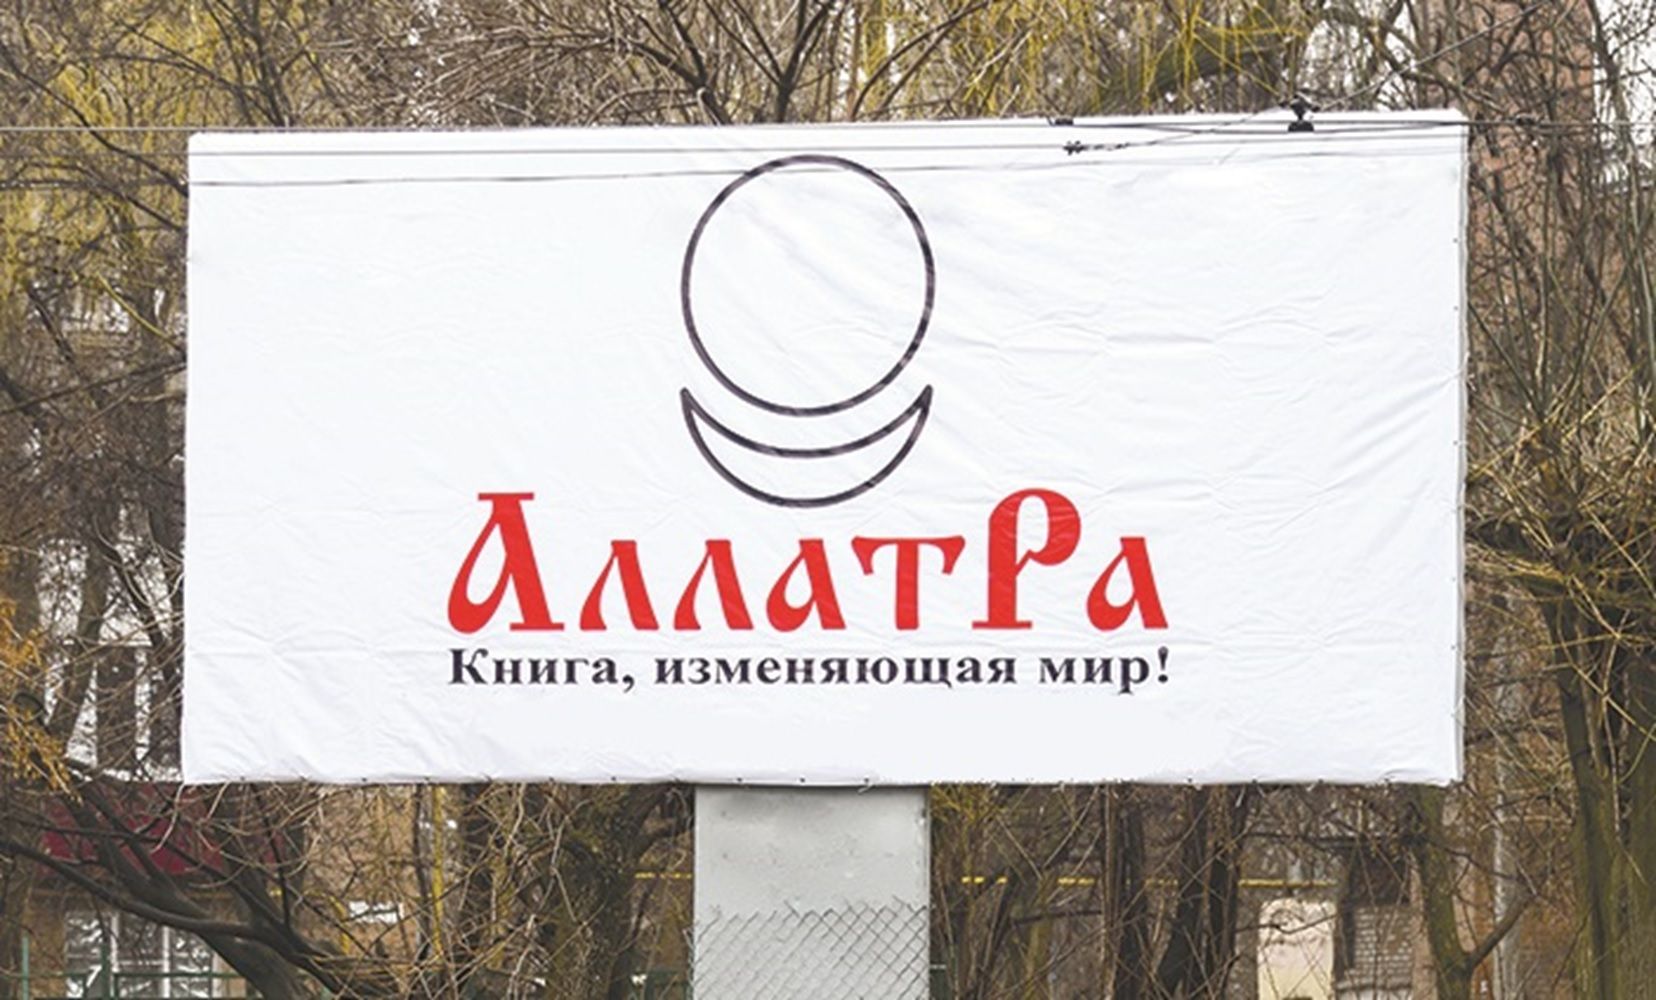 Ще зовсім недавно головна книга руху «АллатРа» мала потужну рекламну кампанію в усіх великих містах України  - фото 118787